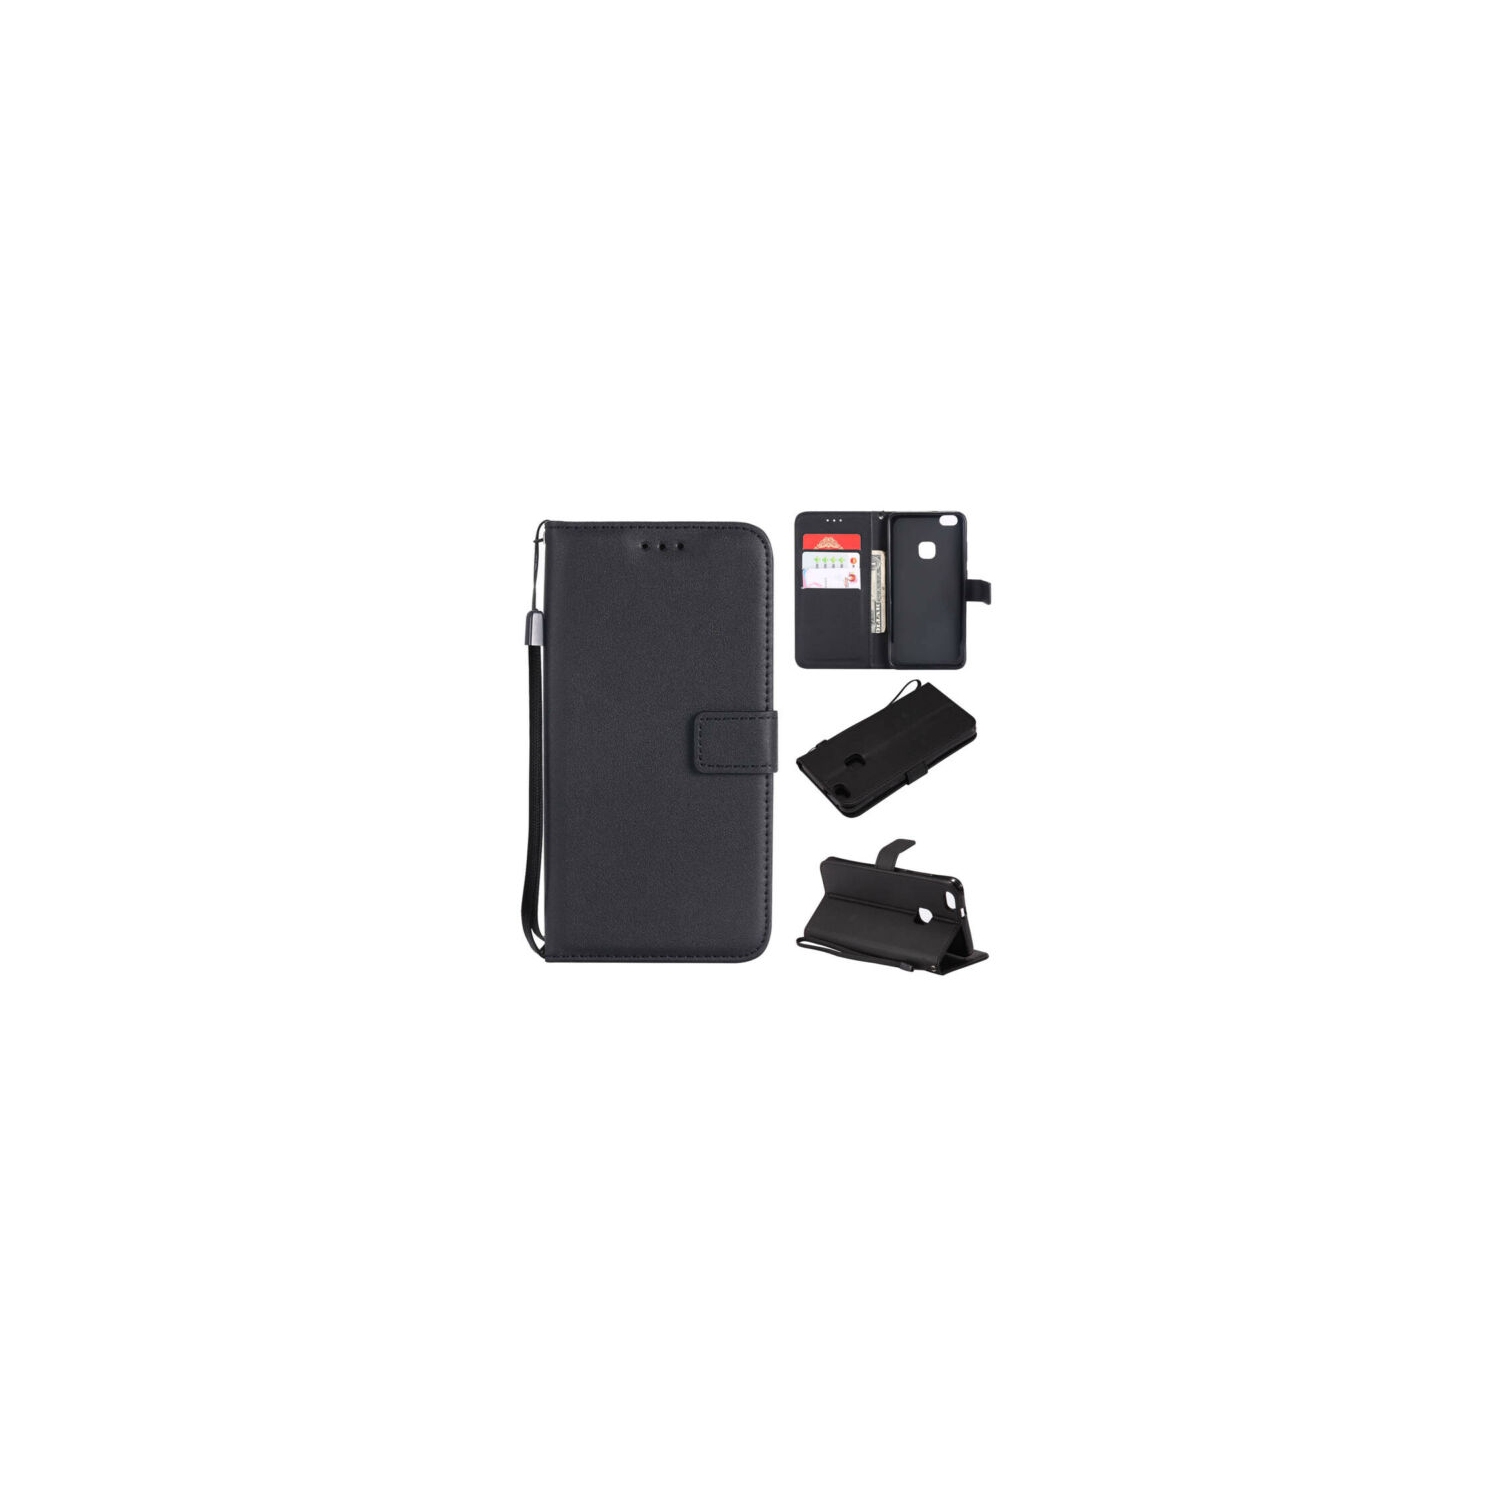 【CSmart】 Magnetic Card Slot Leather Folio Wallet Flip Case Cover for Huawei P10 Lite, Black